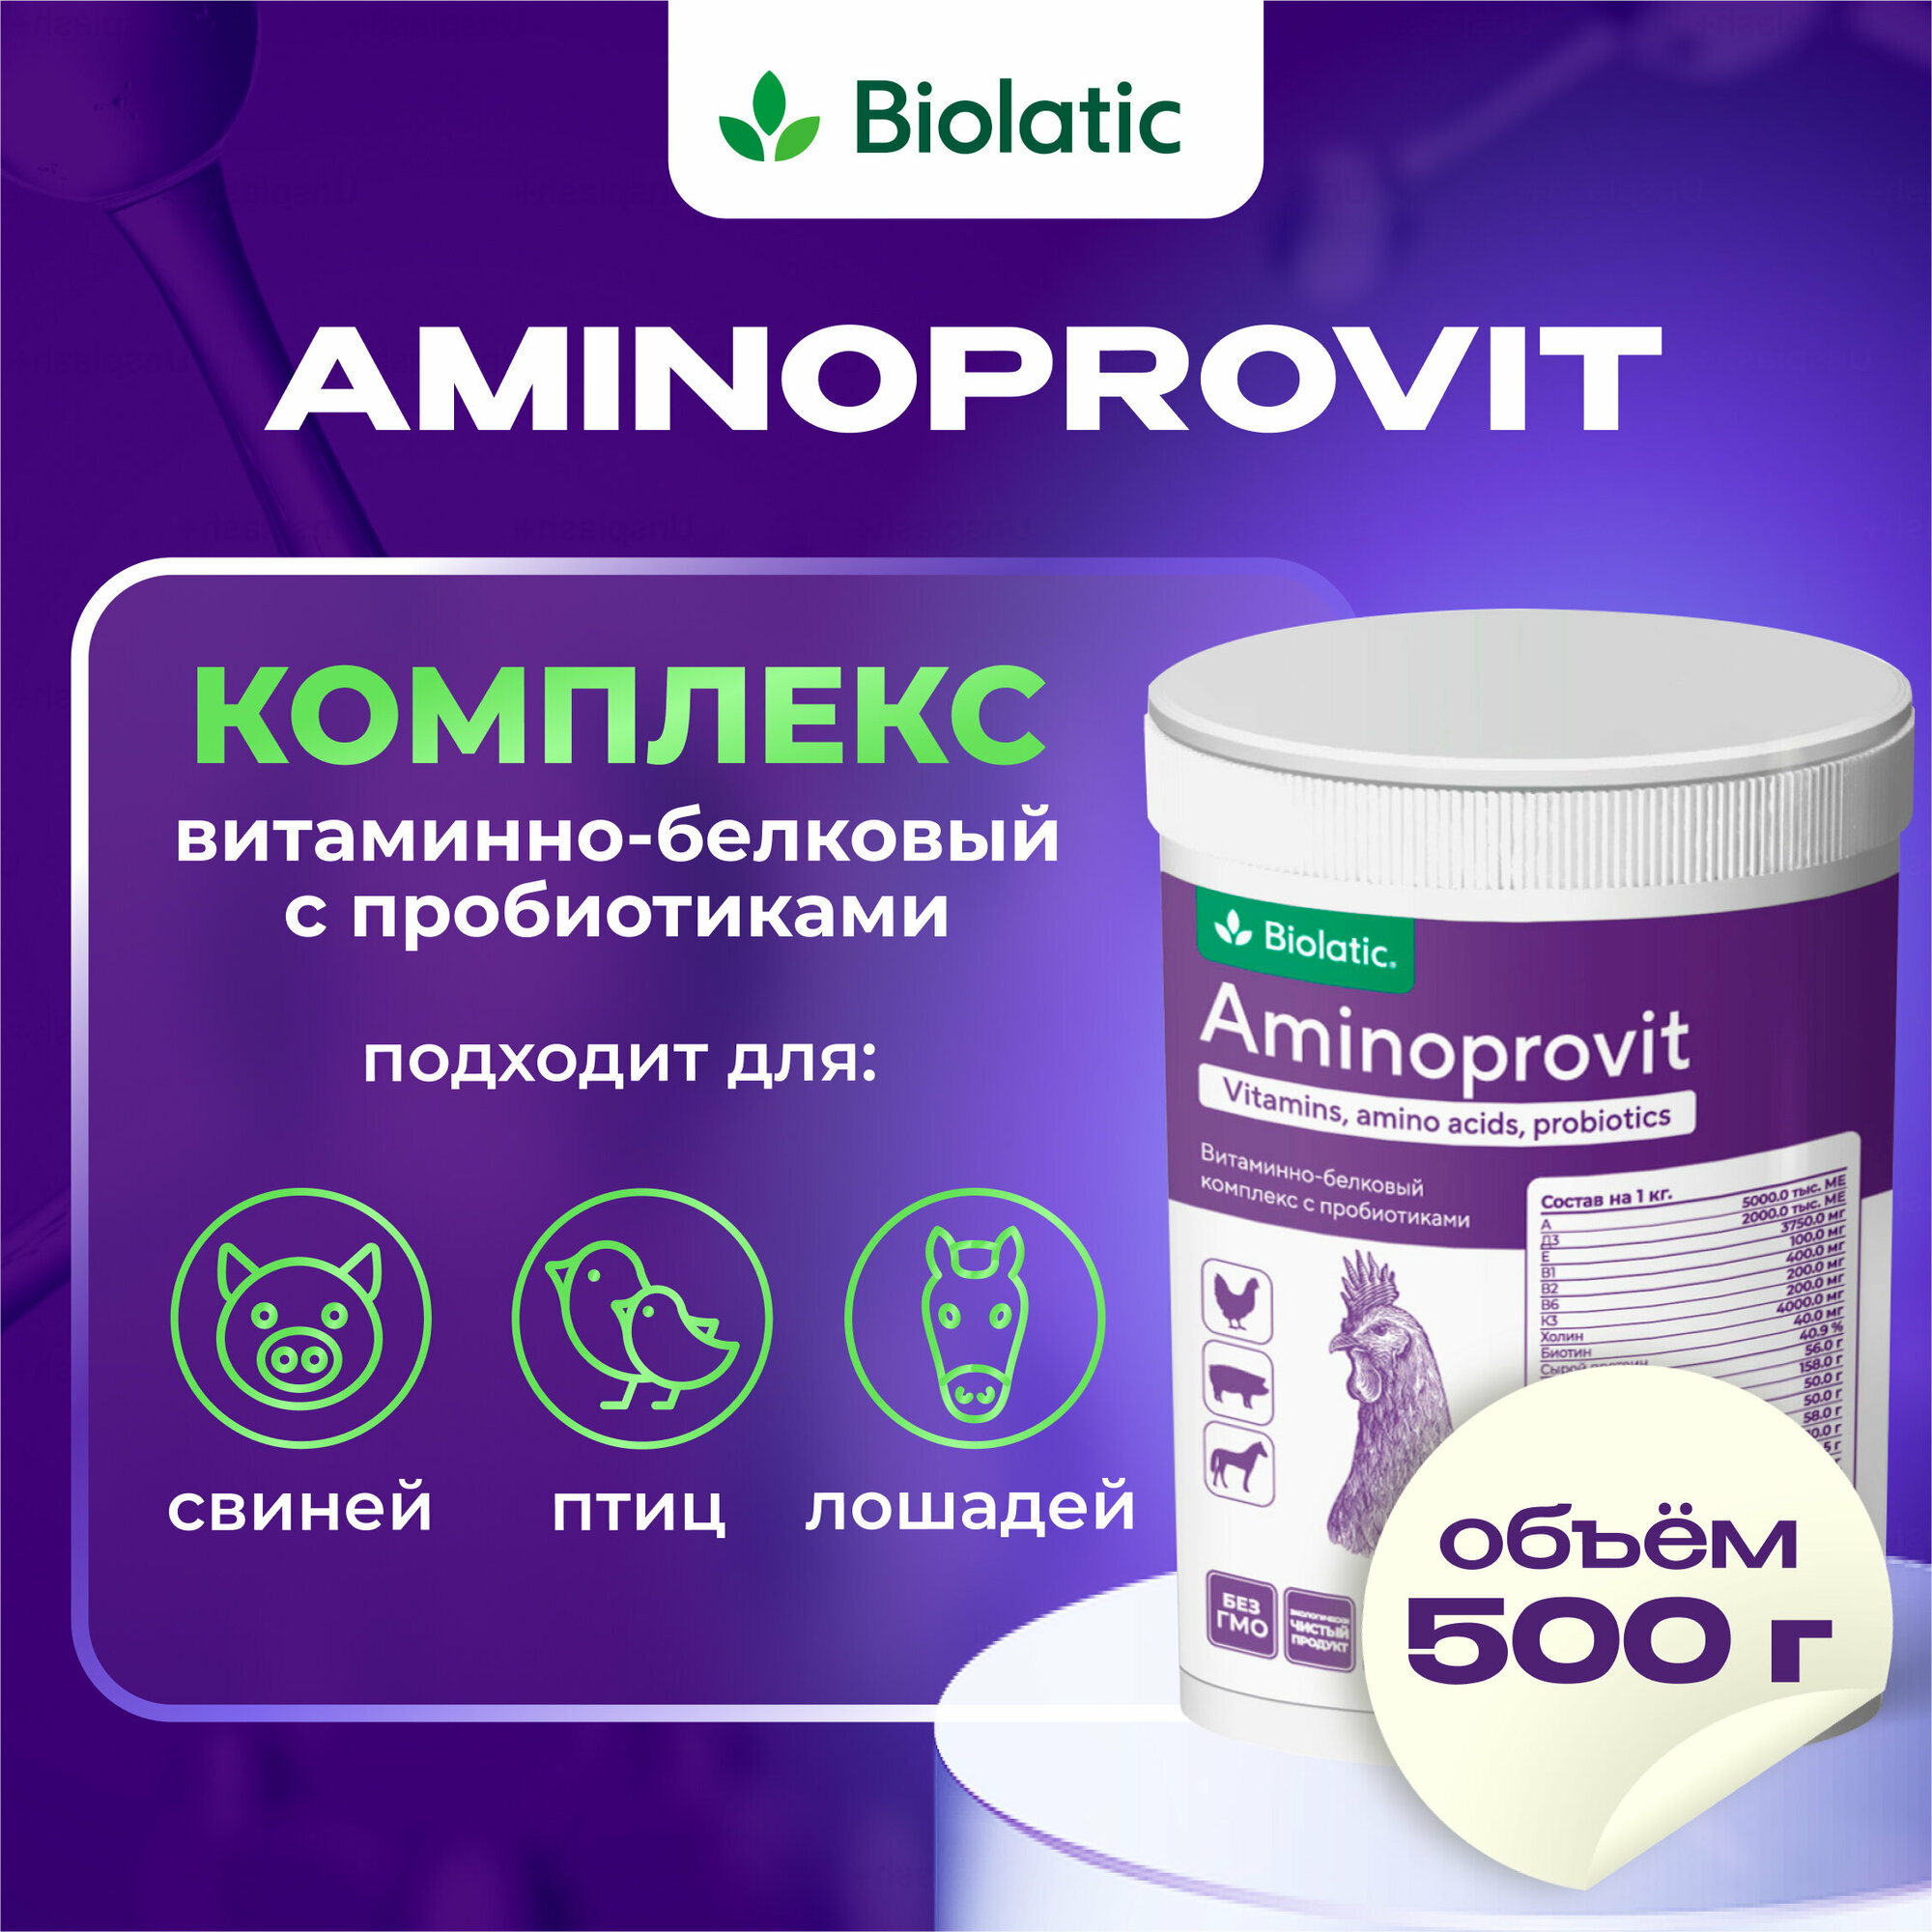 Аминопровит (Aminoprovit) витаминно-белковый комплекс, 500 гр. Biolatic